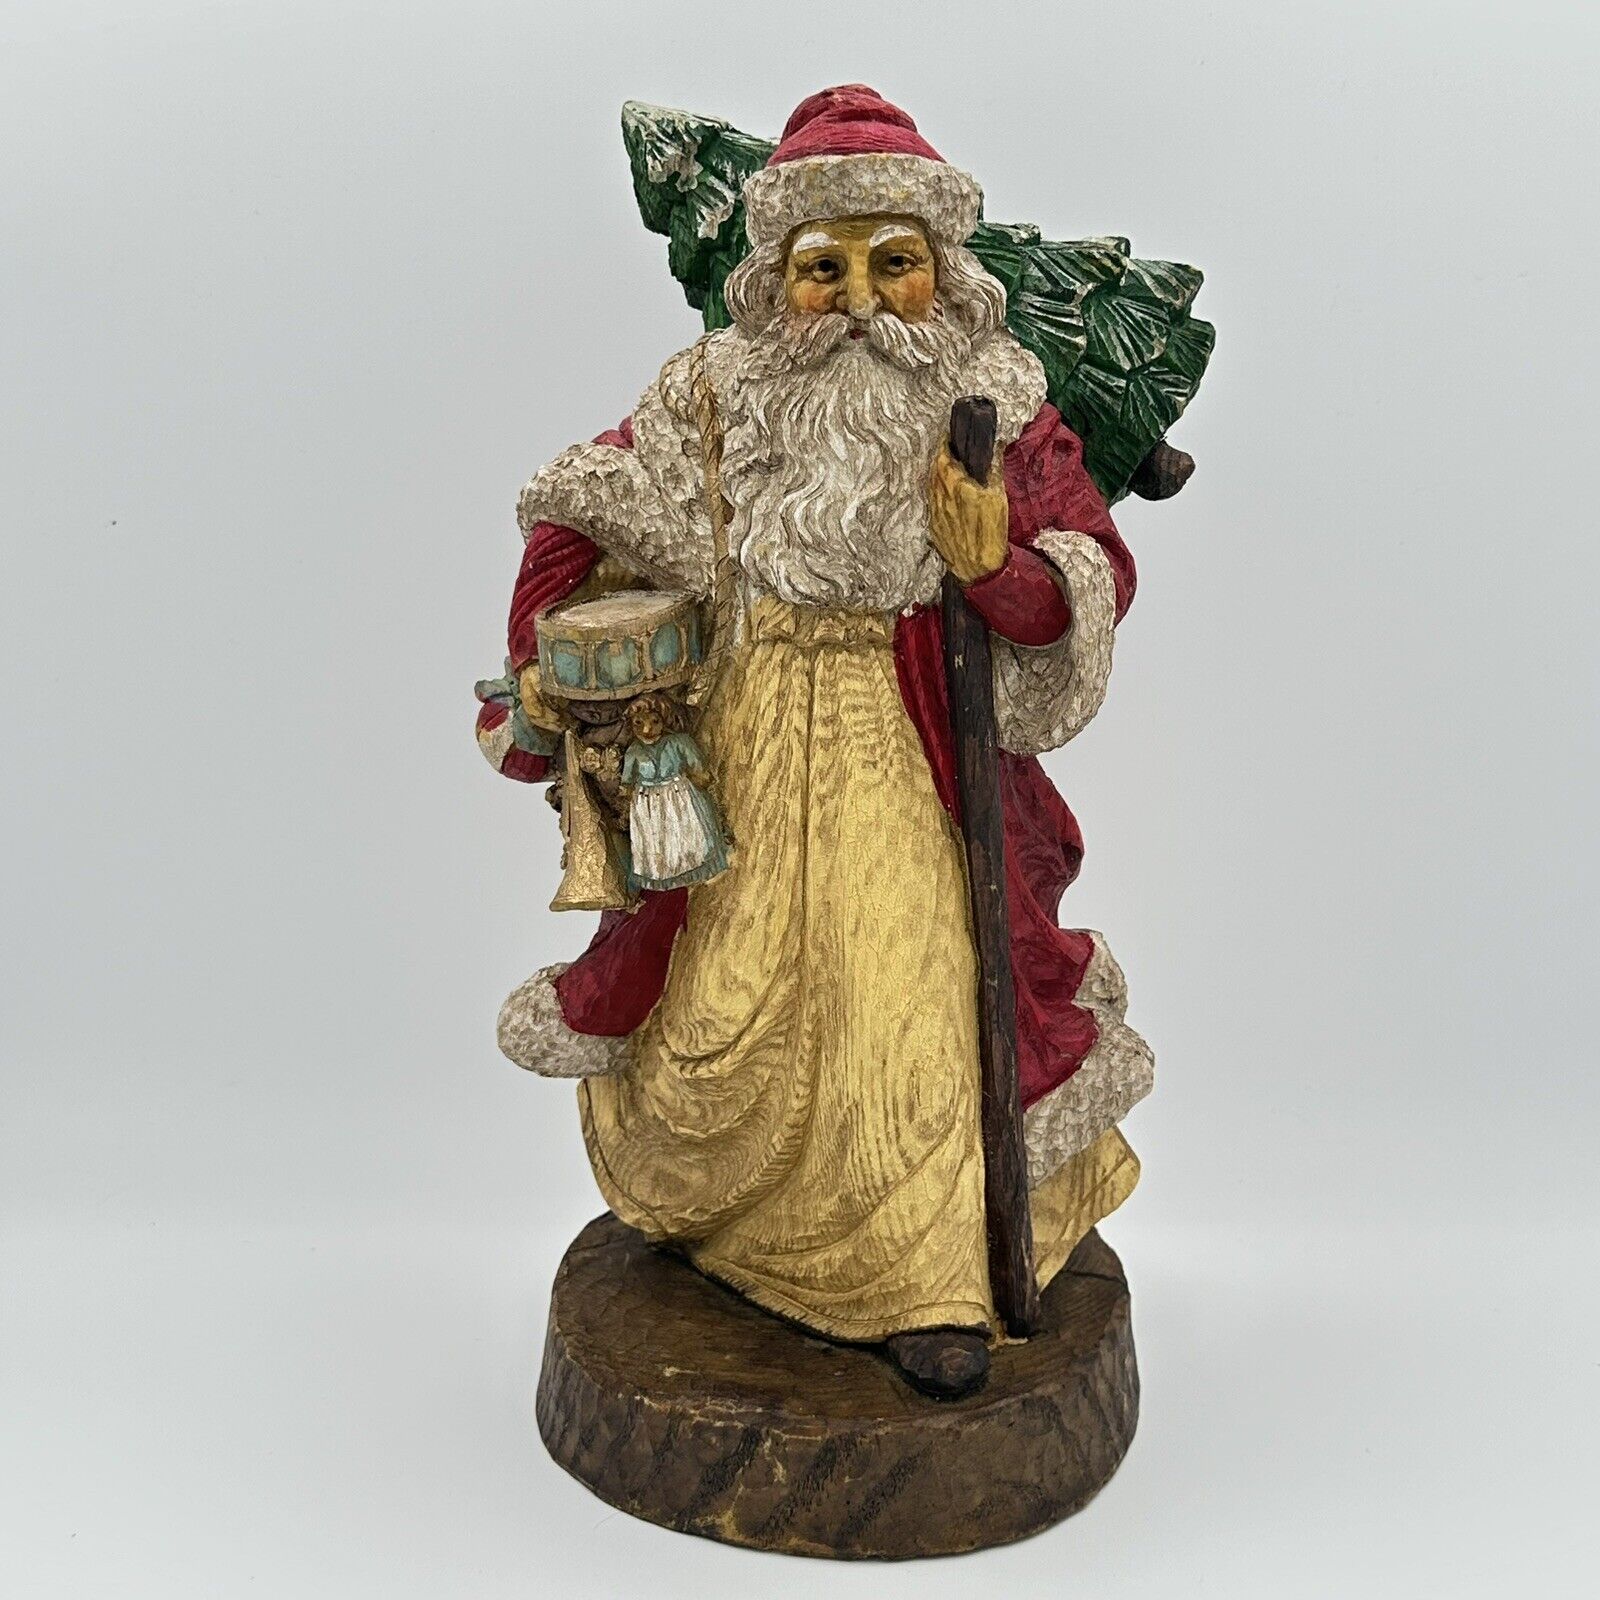 Vintage Wooden Santa Figurine 12”Midwest Imports Christmas Tree Cottagecore